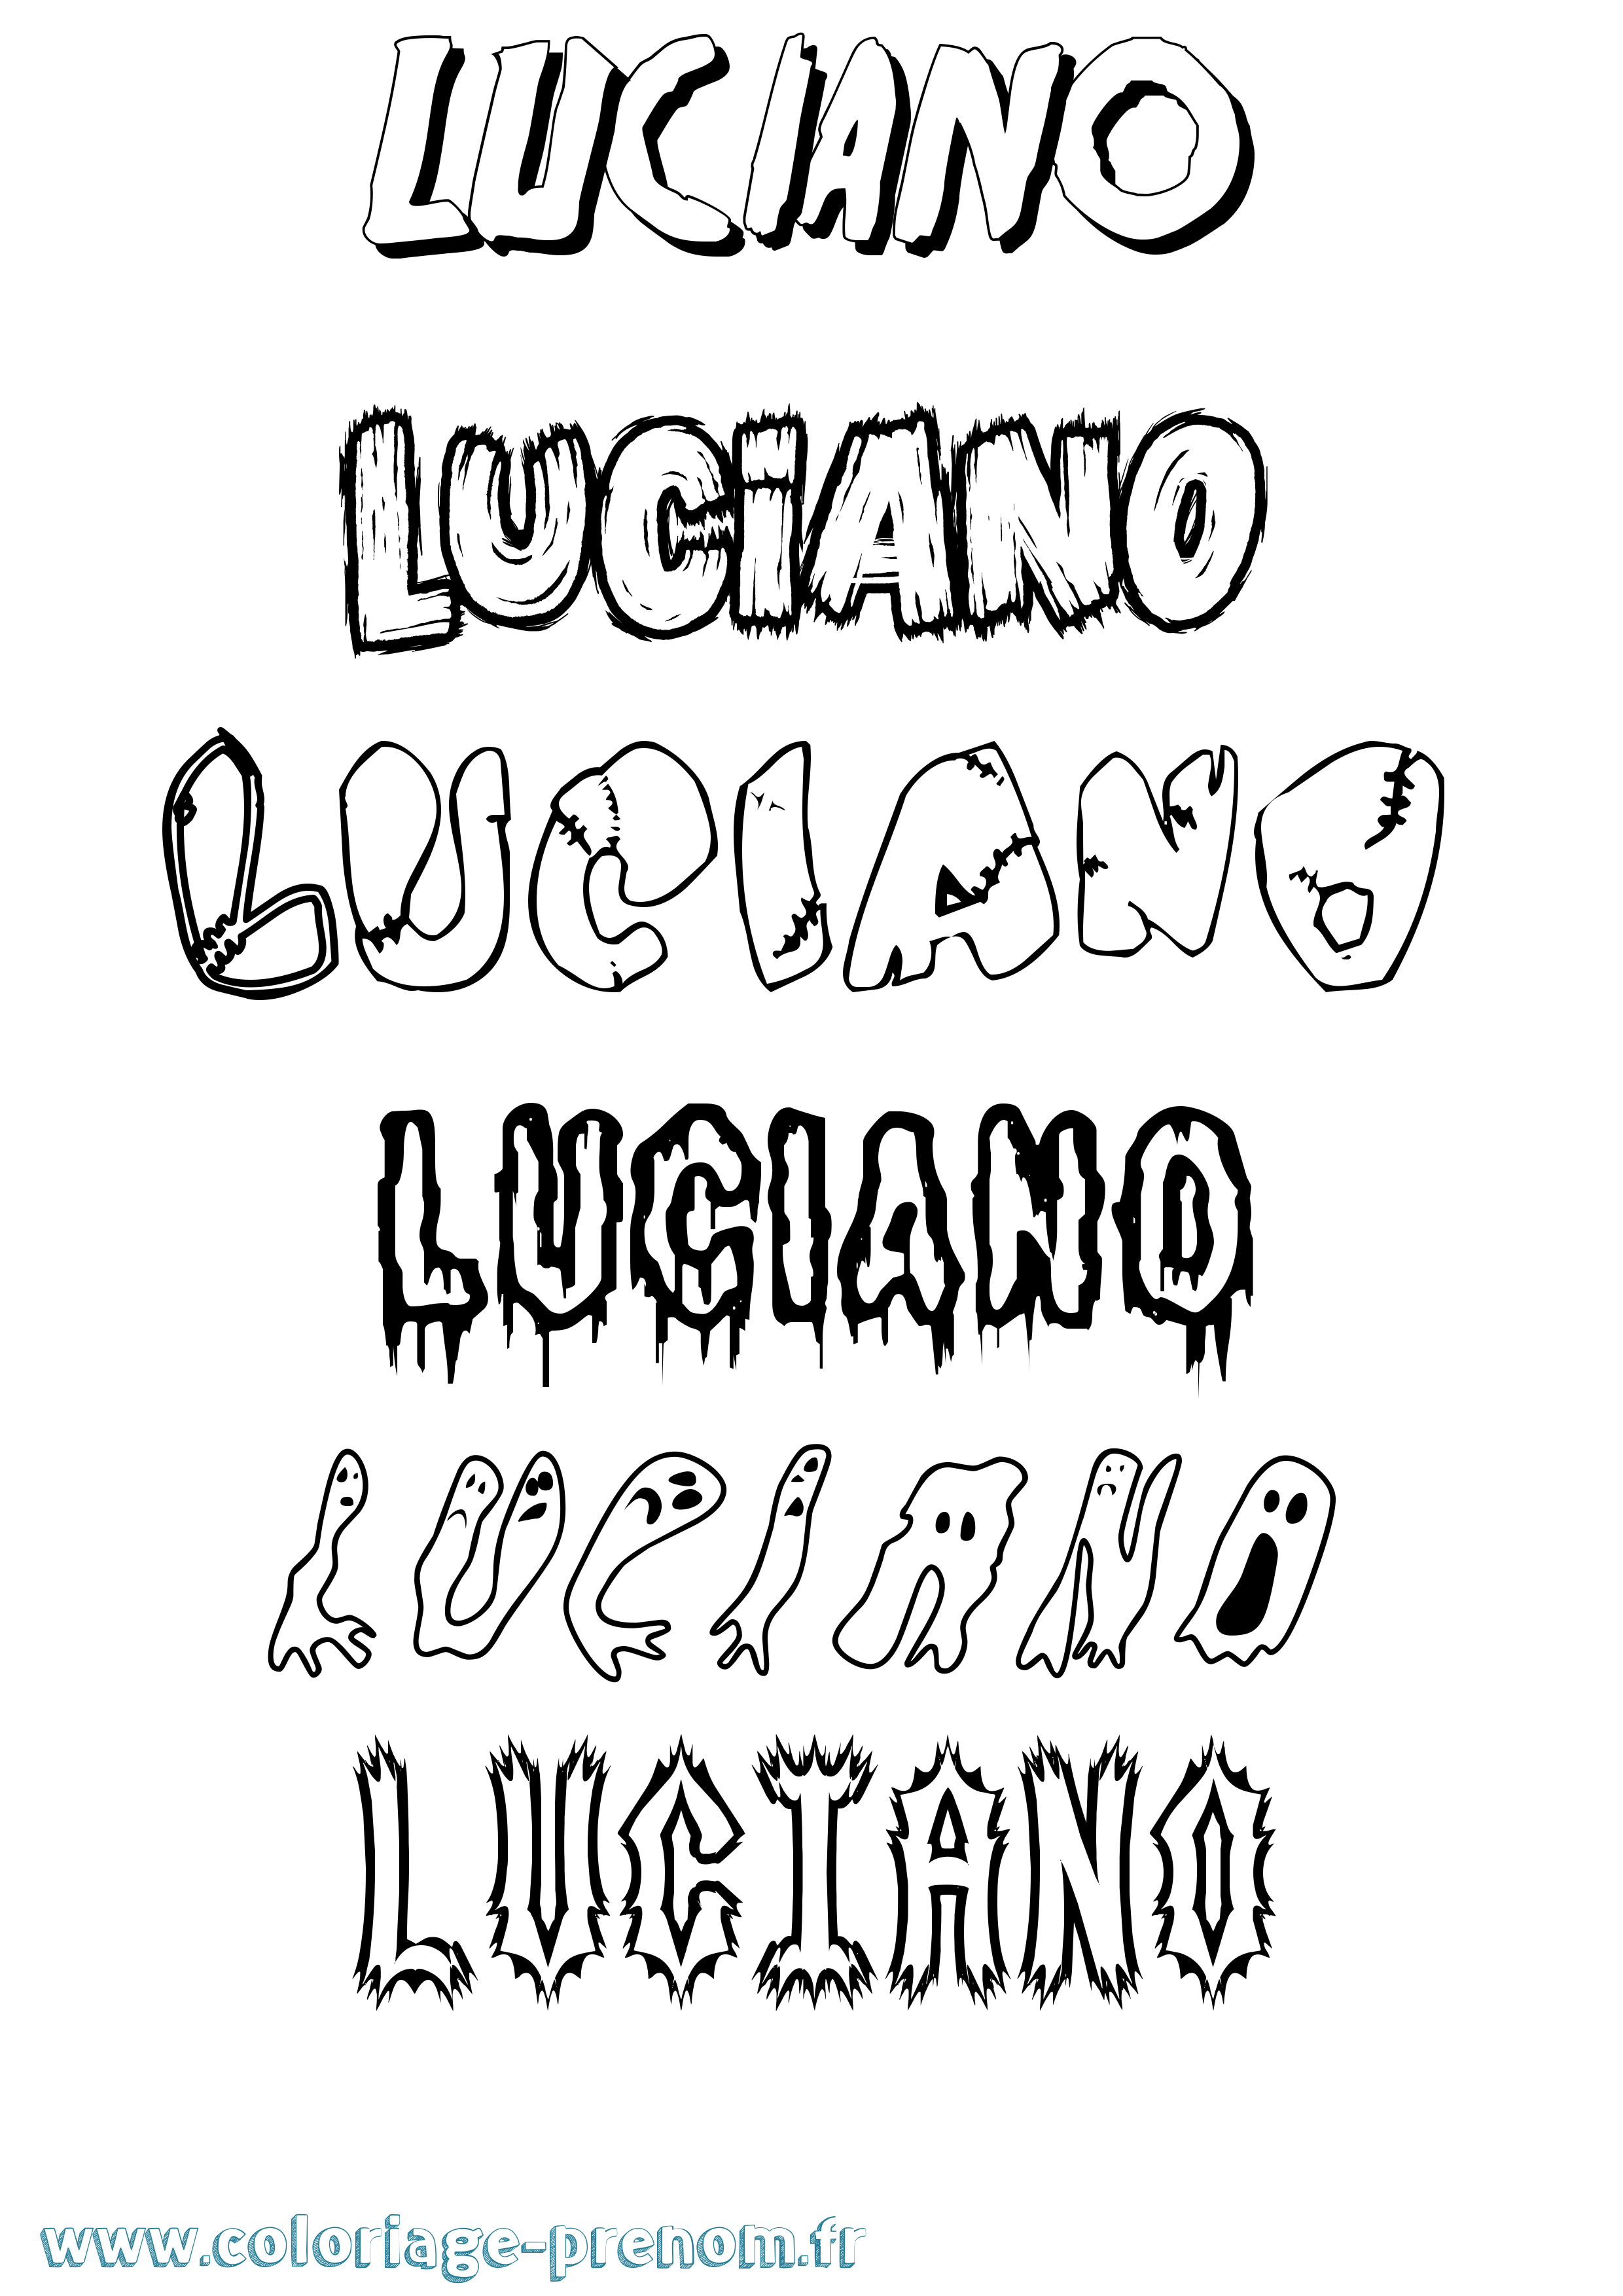 Coloriage prénom Luciano Frisson